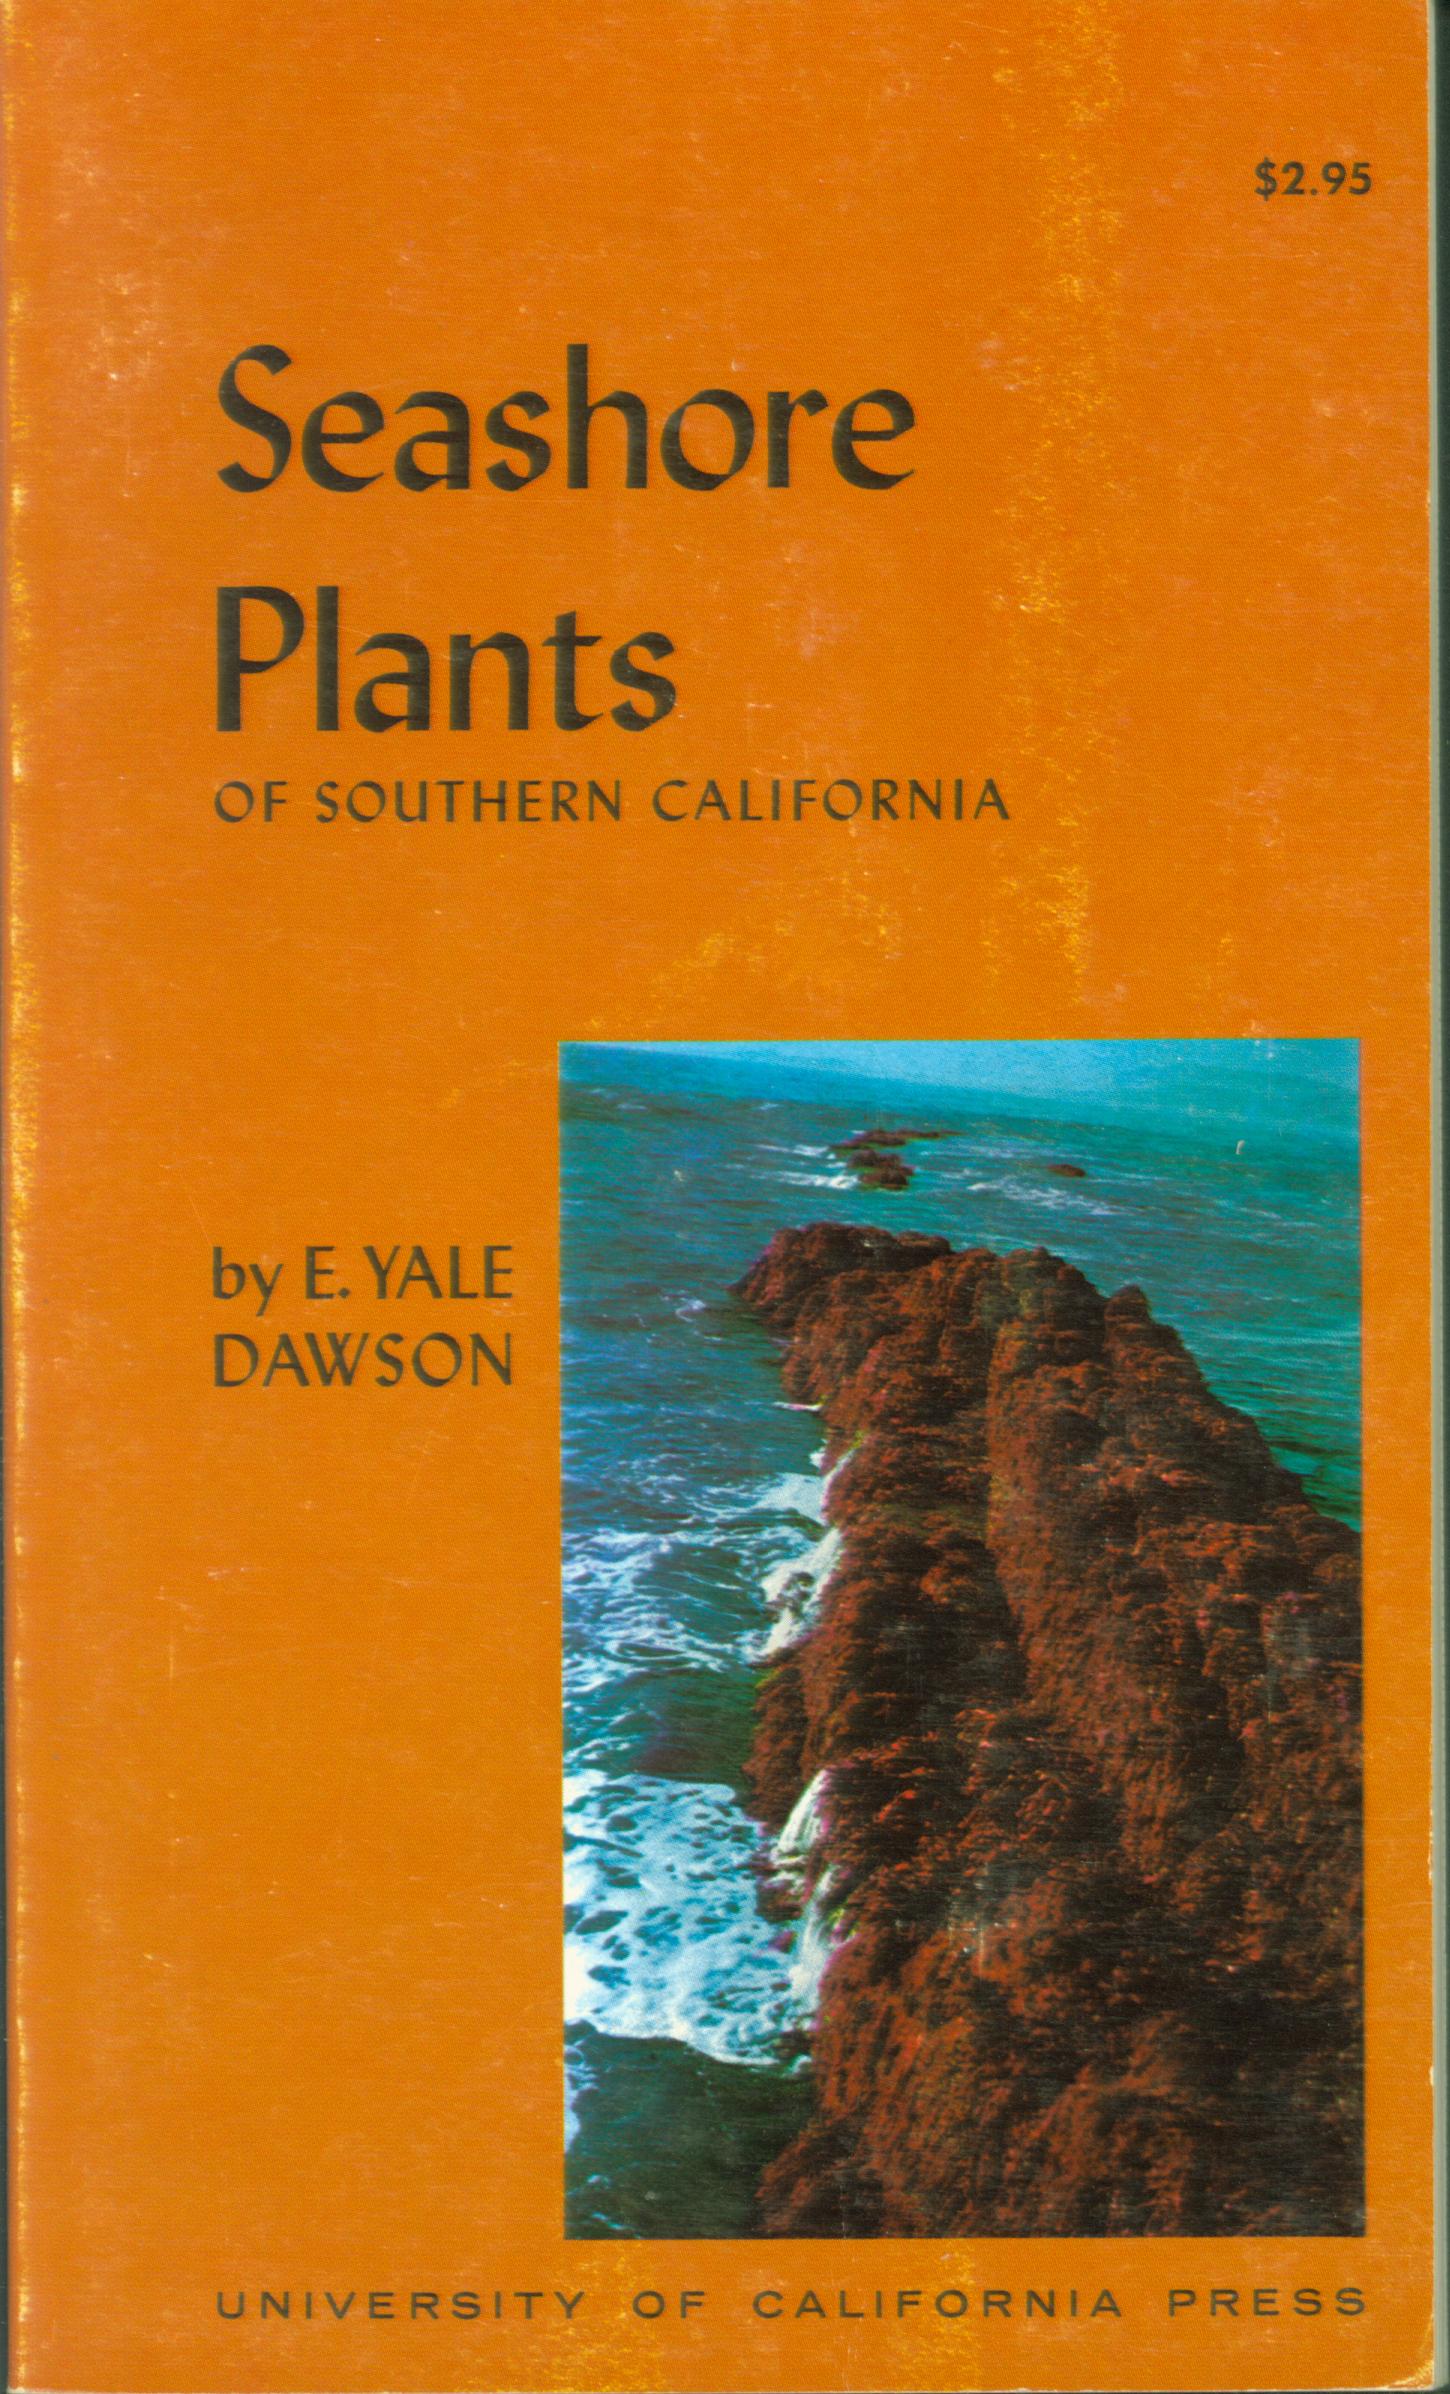 SEASHORE PLANTS OF SOUTHERN CALIFORNIA.